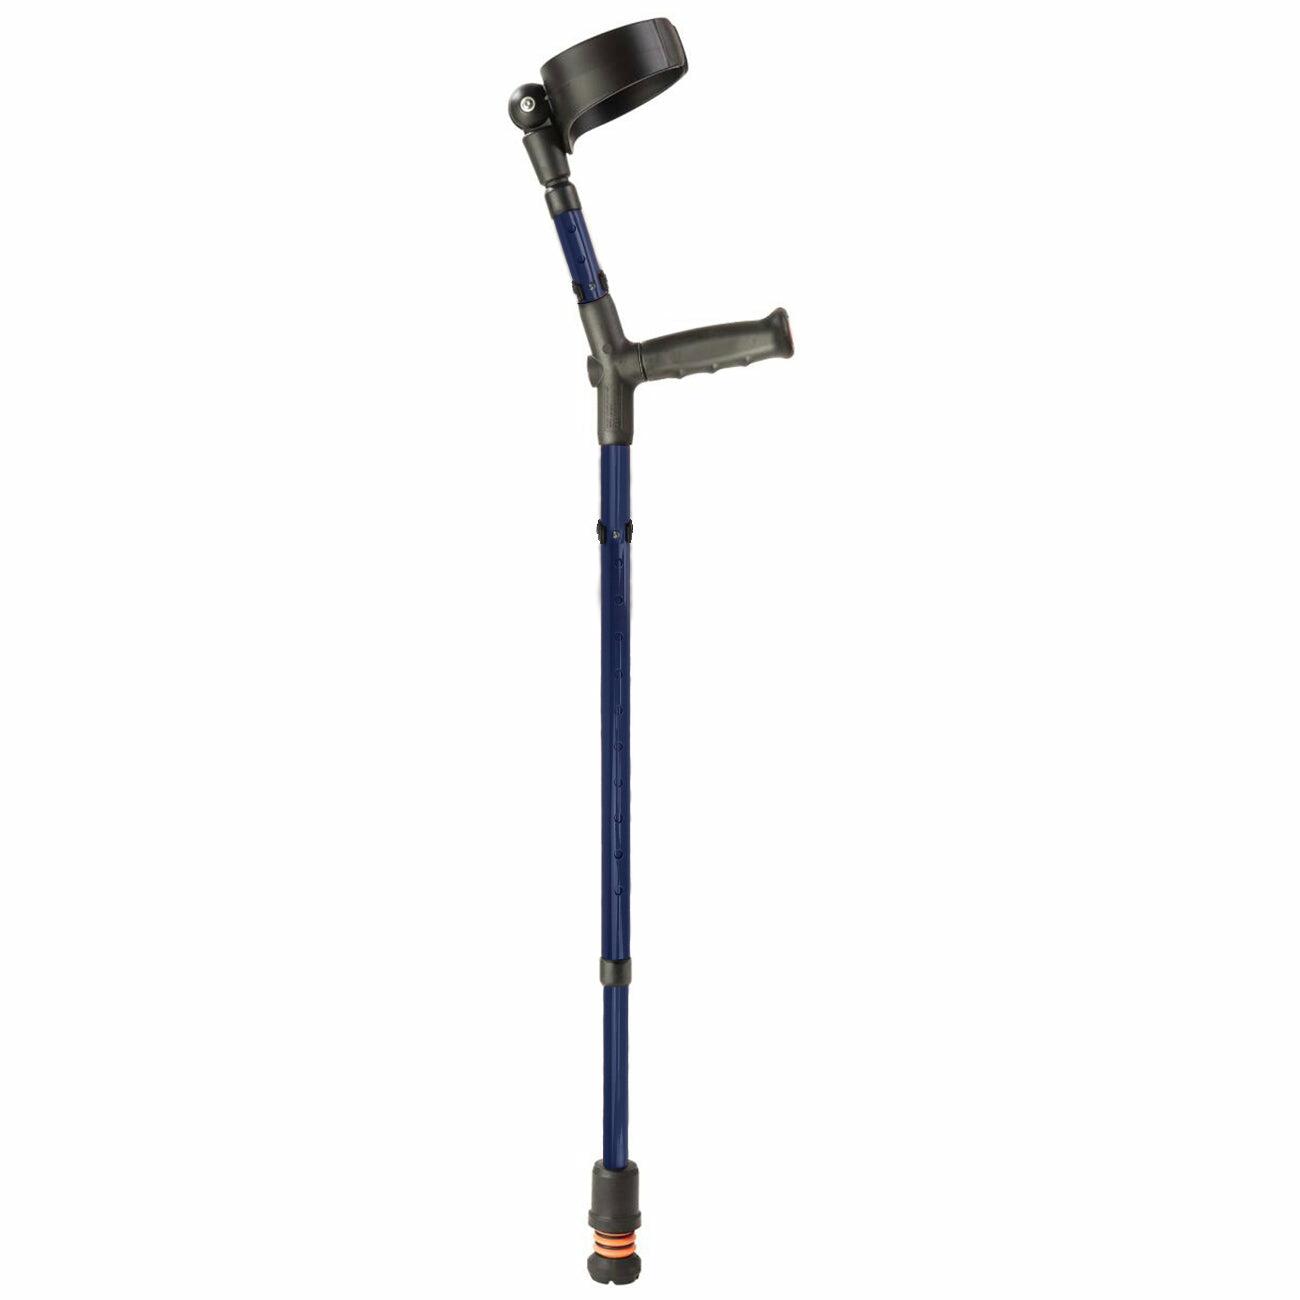 A single blue Flexyfoot Soft Grip Double Adjustable Crutch